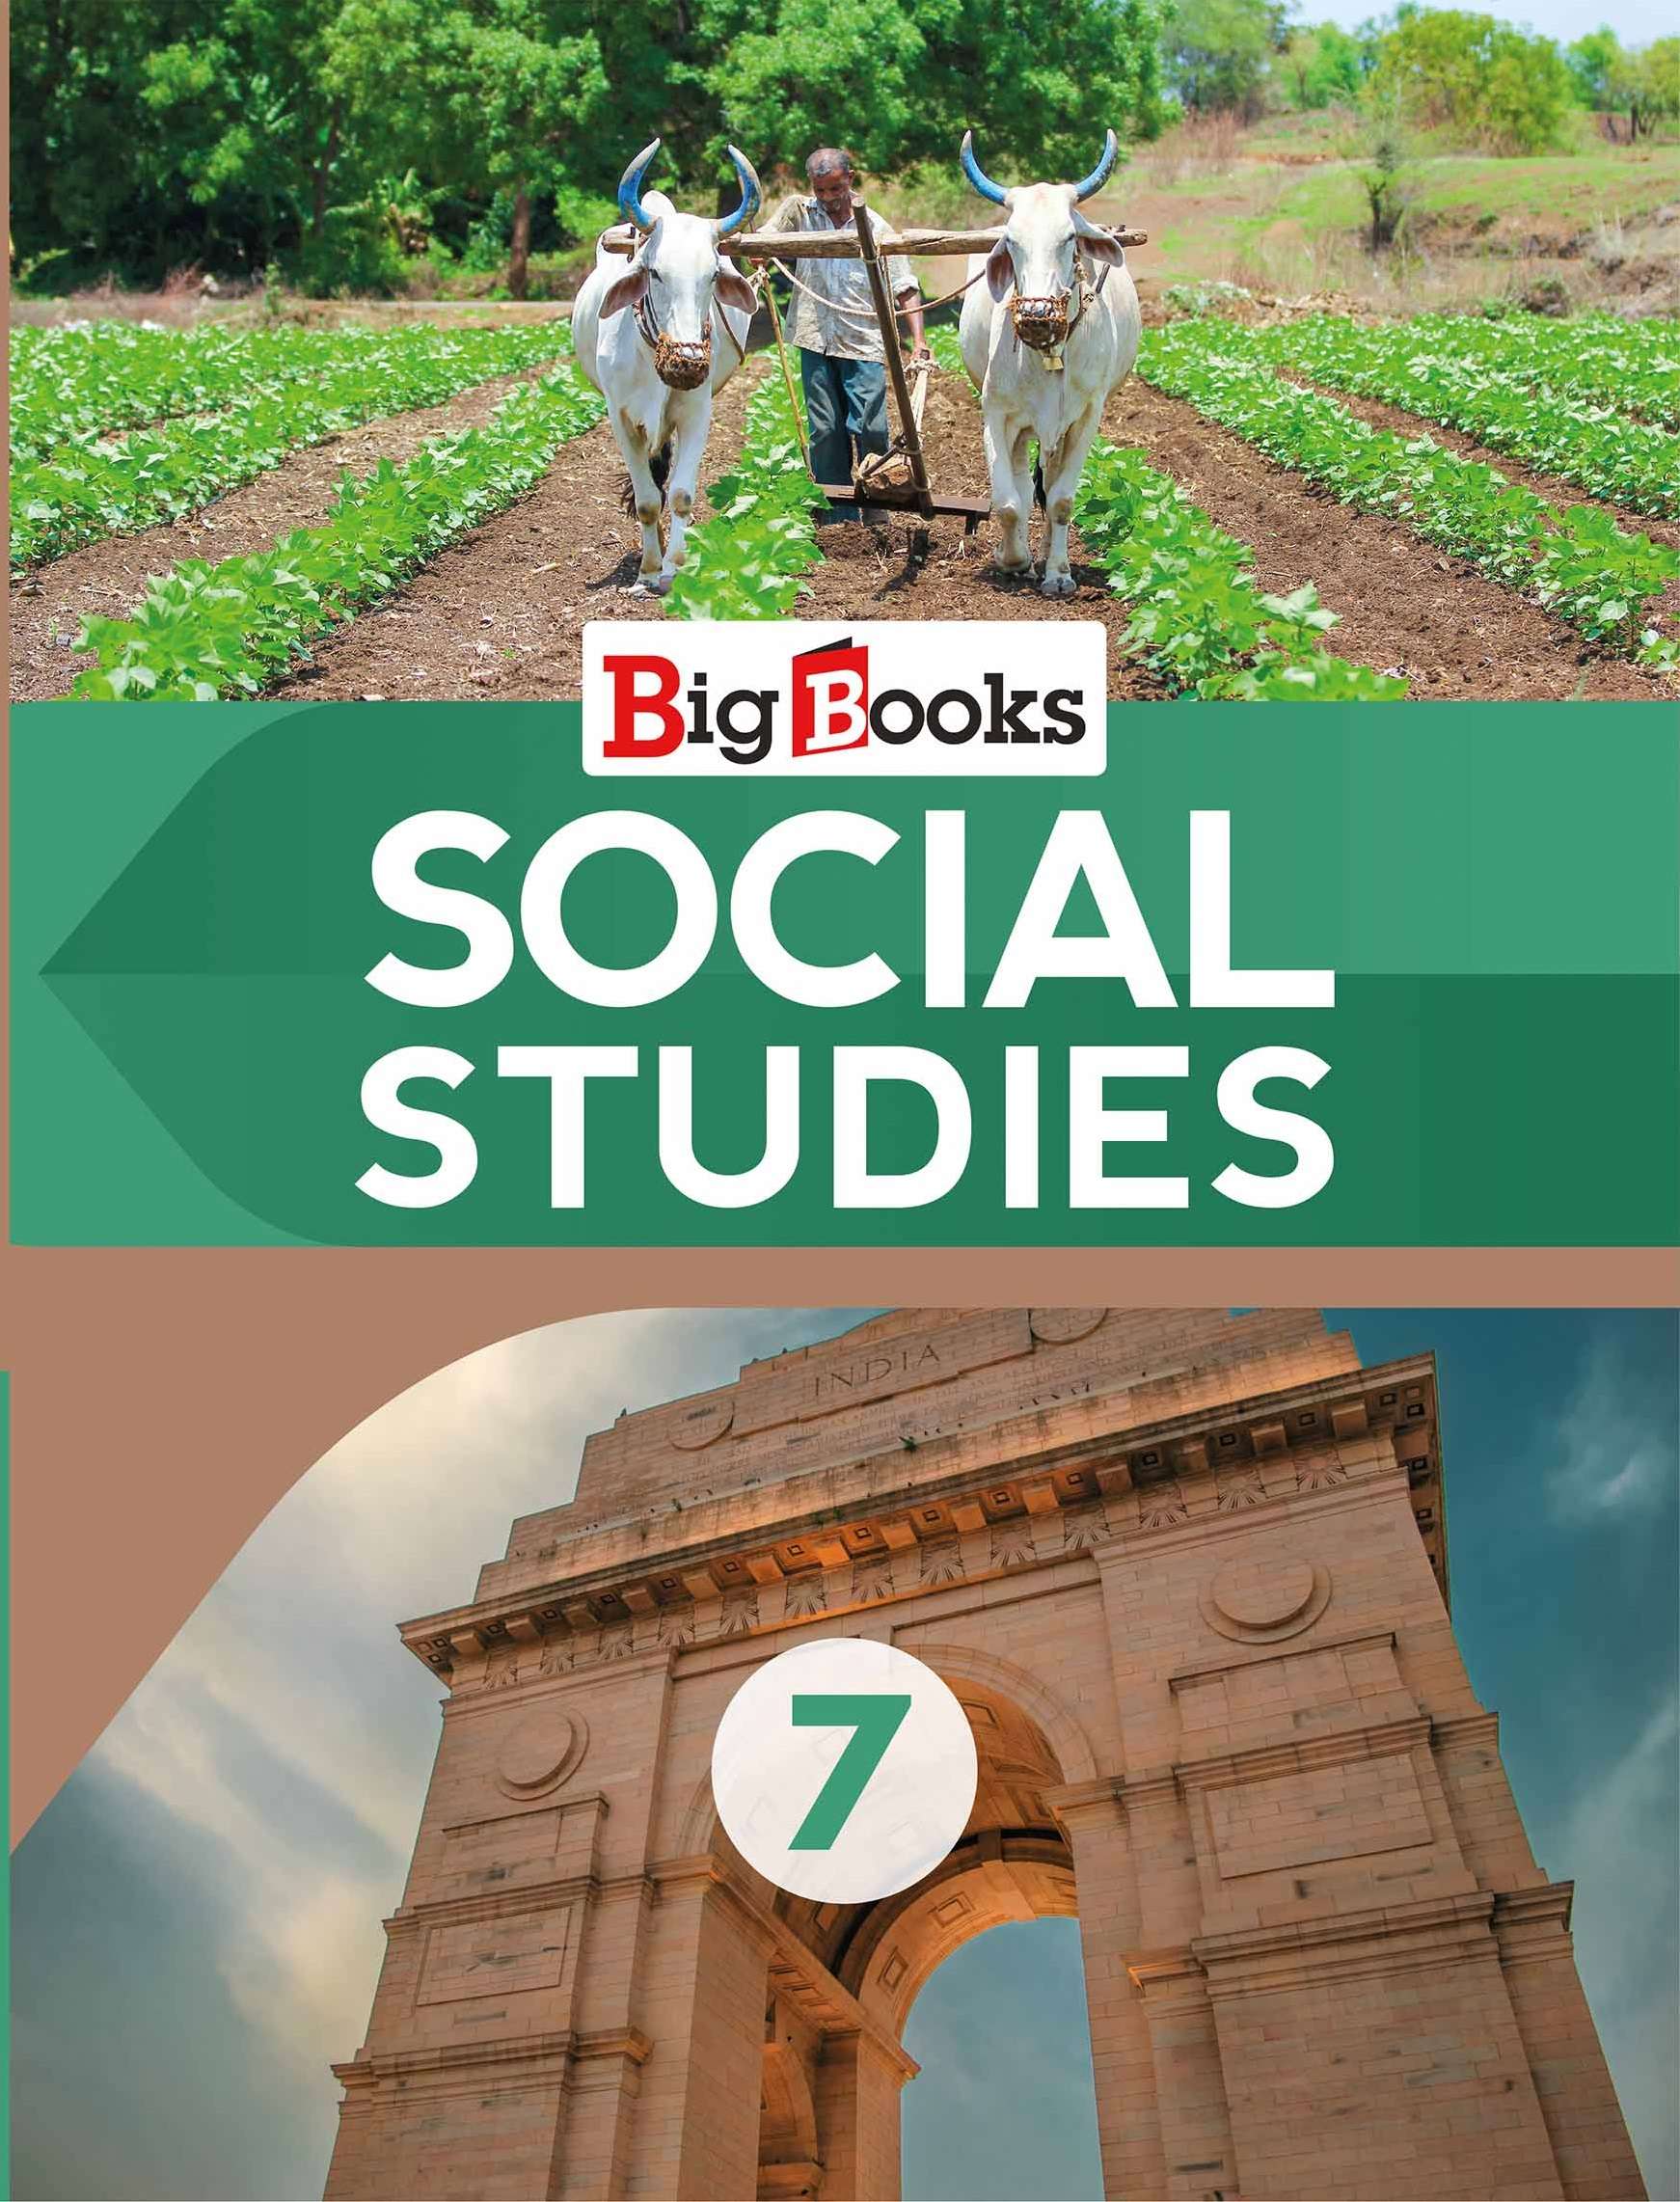 Buy Social studies book for 7 online